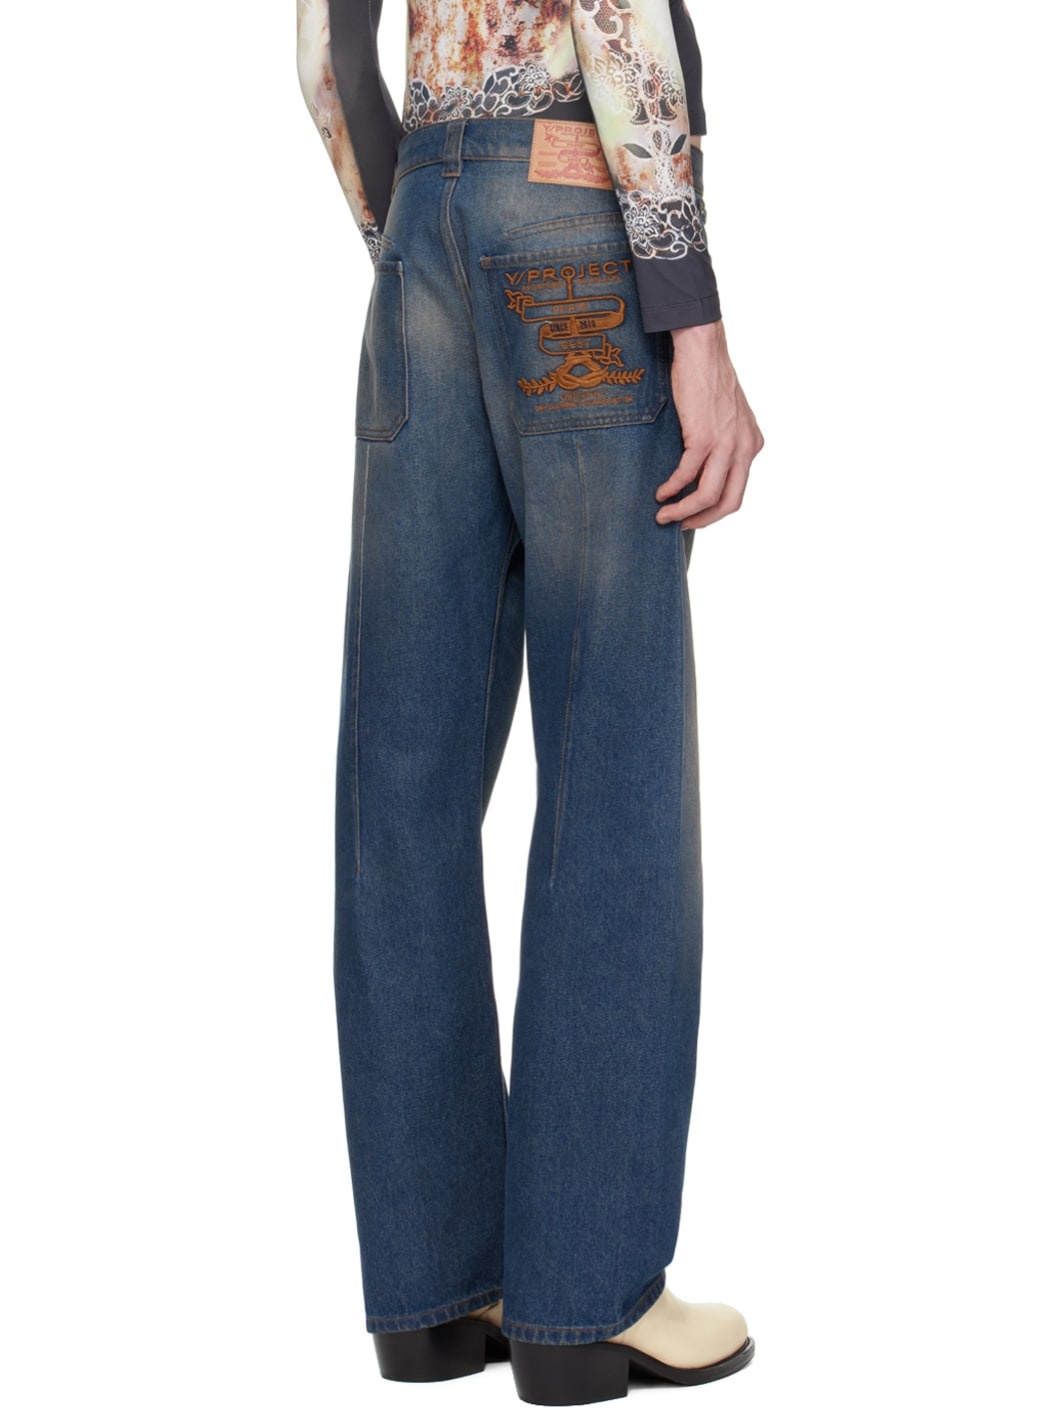 SSENSE Exclusive Indigo 'Paris' Best' Jeans - 3